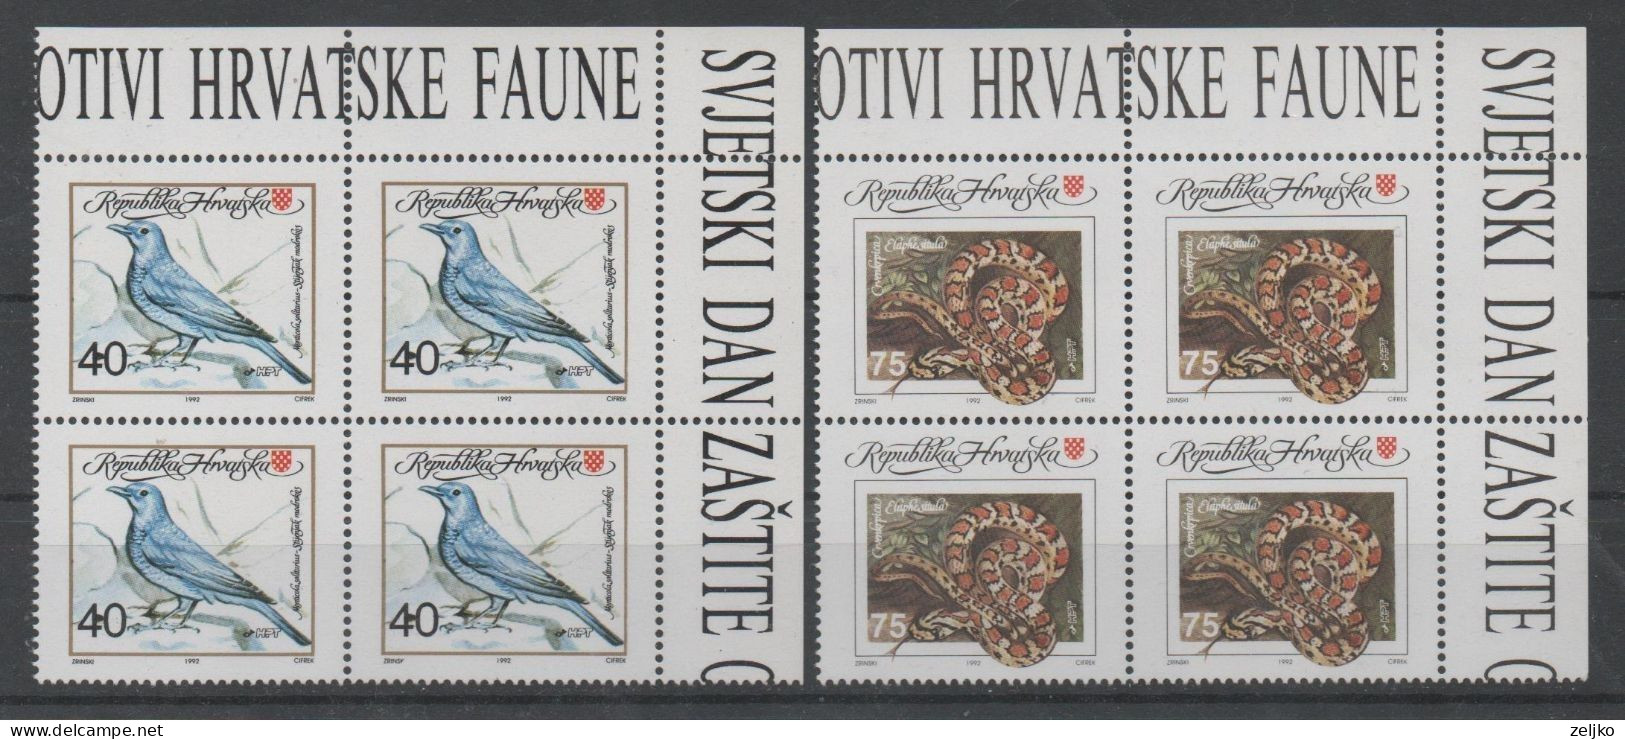 *** Croatia 1992, MNH, Michel 207 - 208, Fauna, Bird, Snake, World Environment Day, 2 Blocks Of 4 Stamps - Croatia